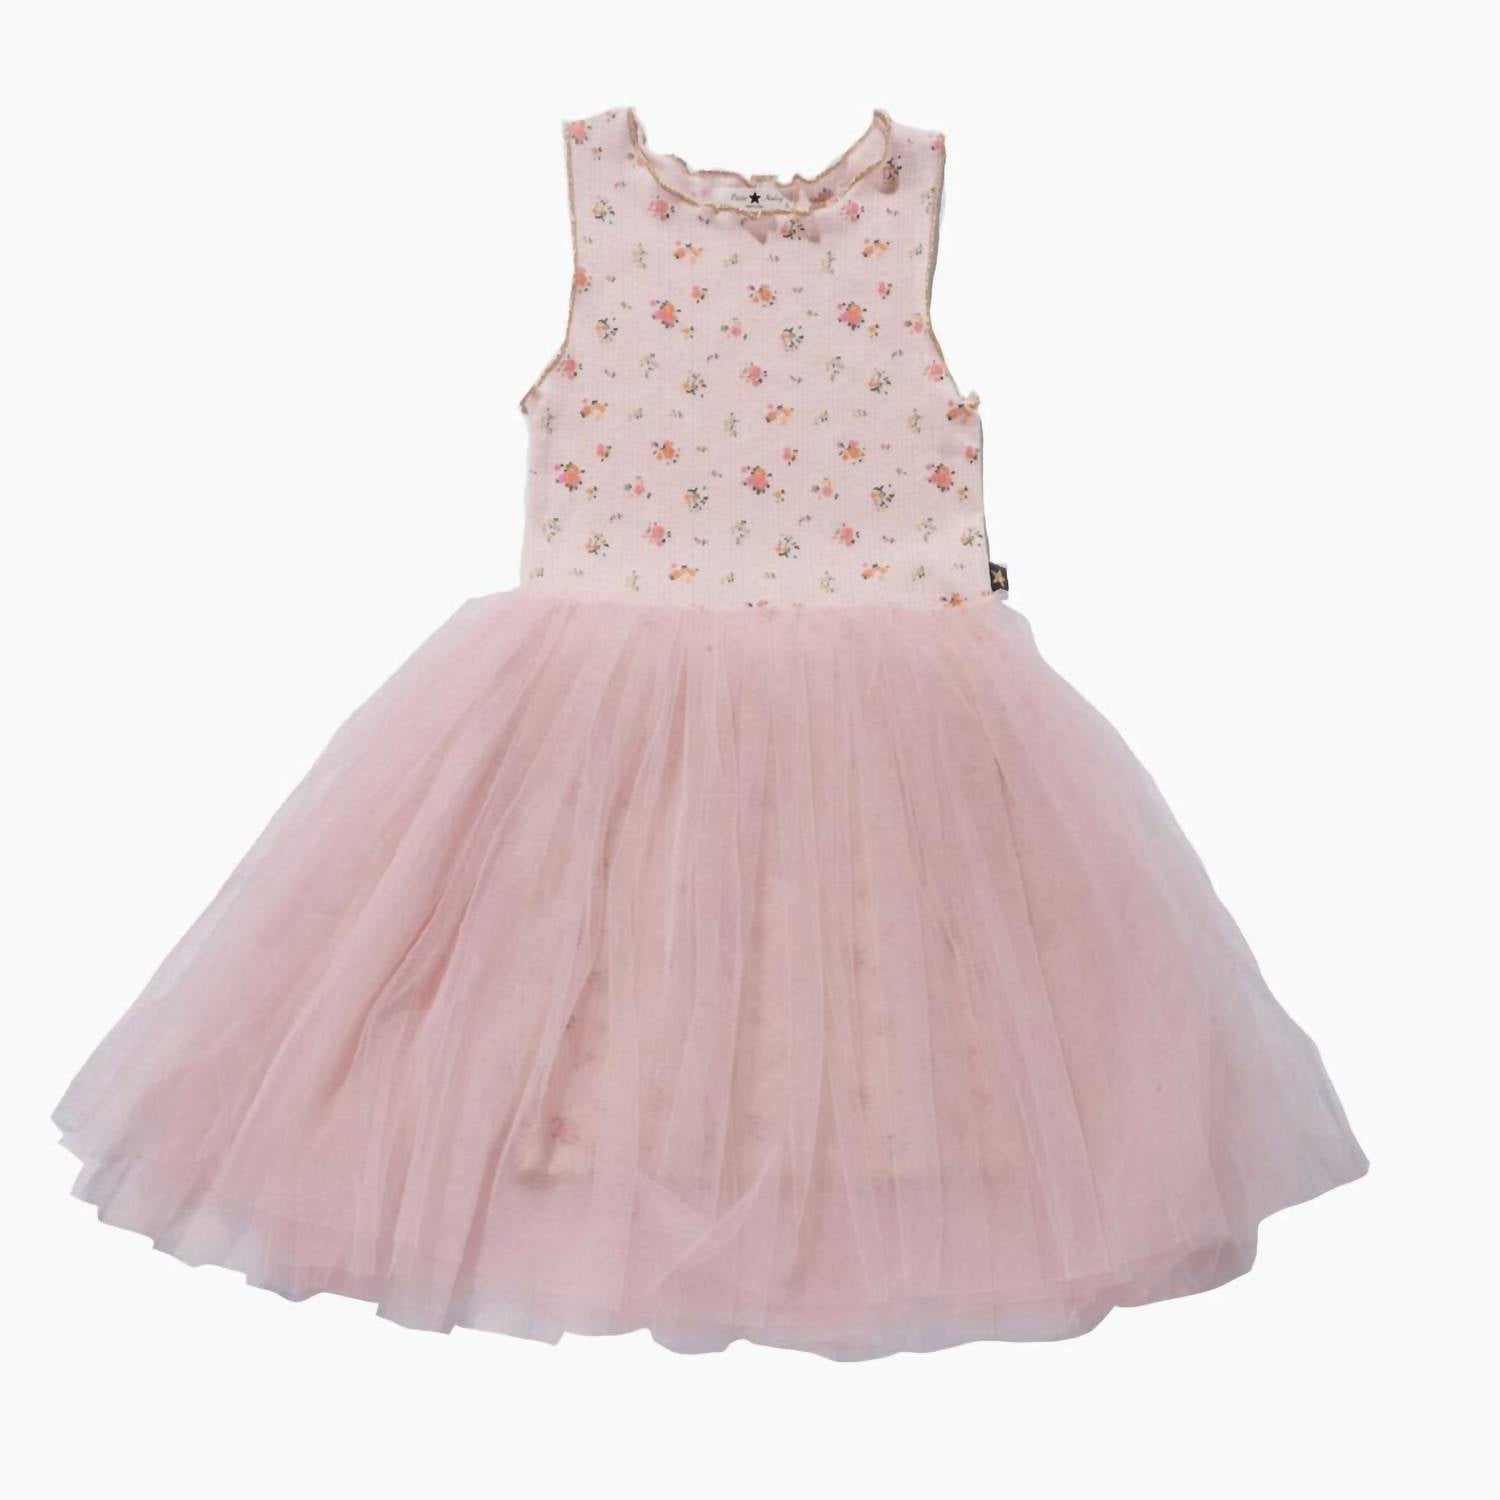 PETITE HAILEY Kids Vintage Flower Tutu Dress in Pink